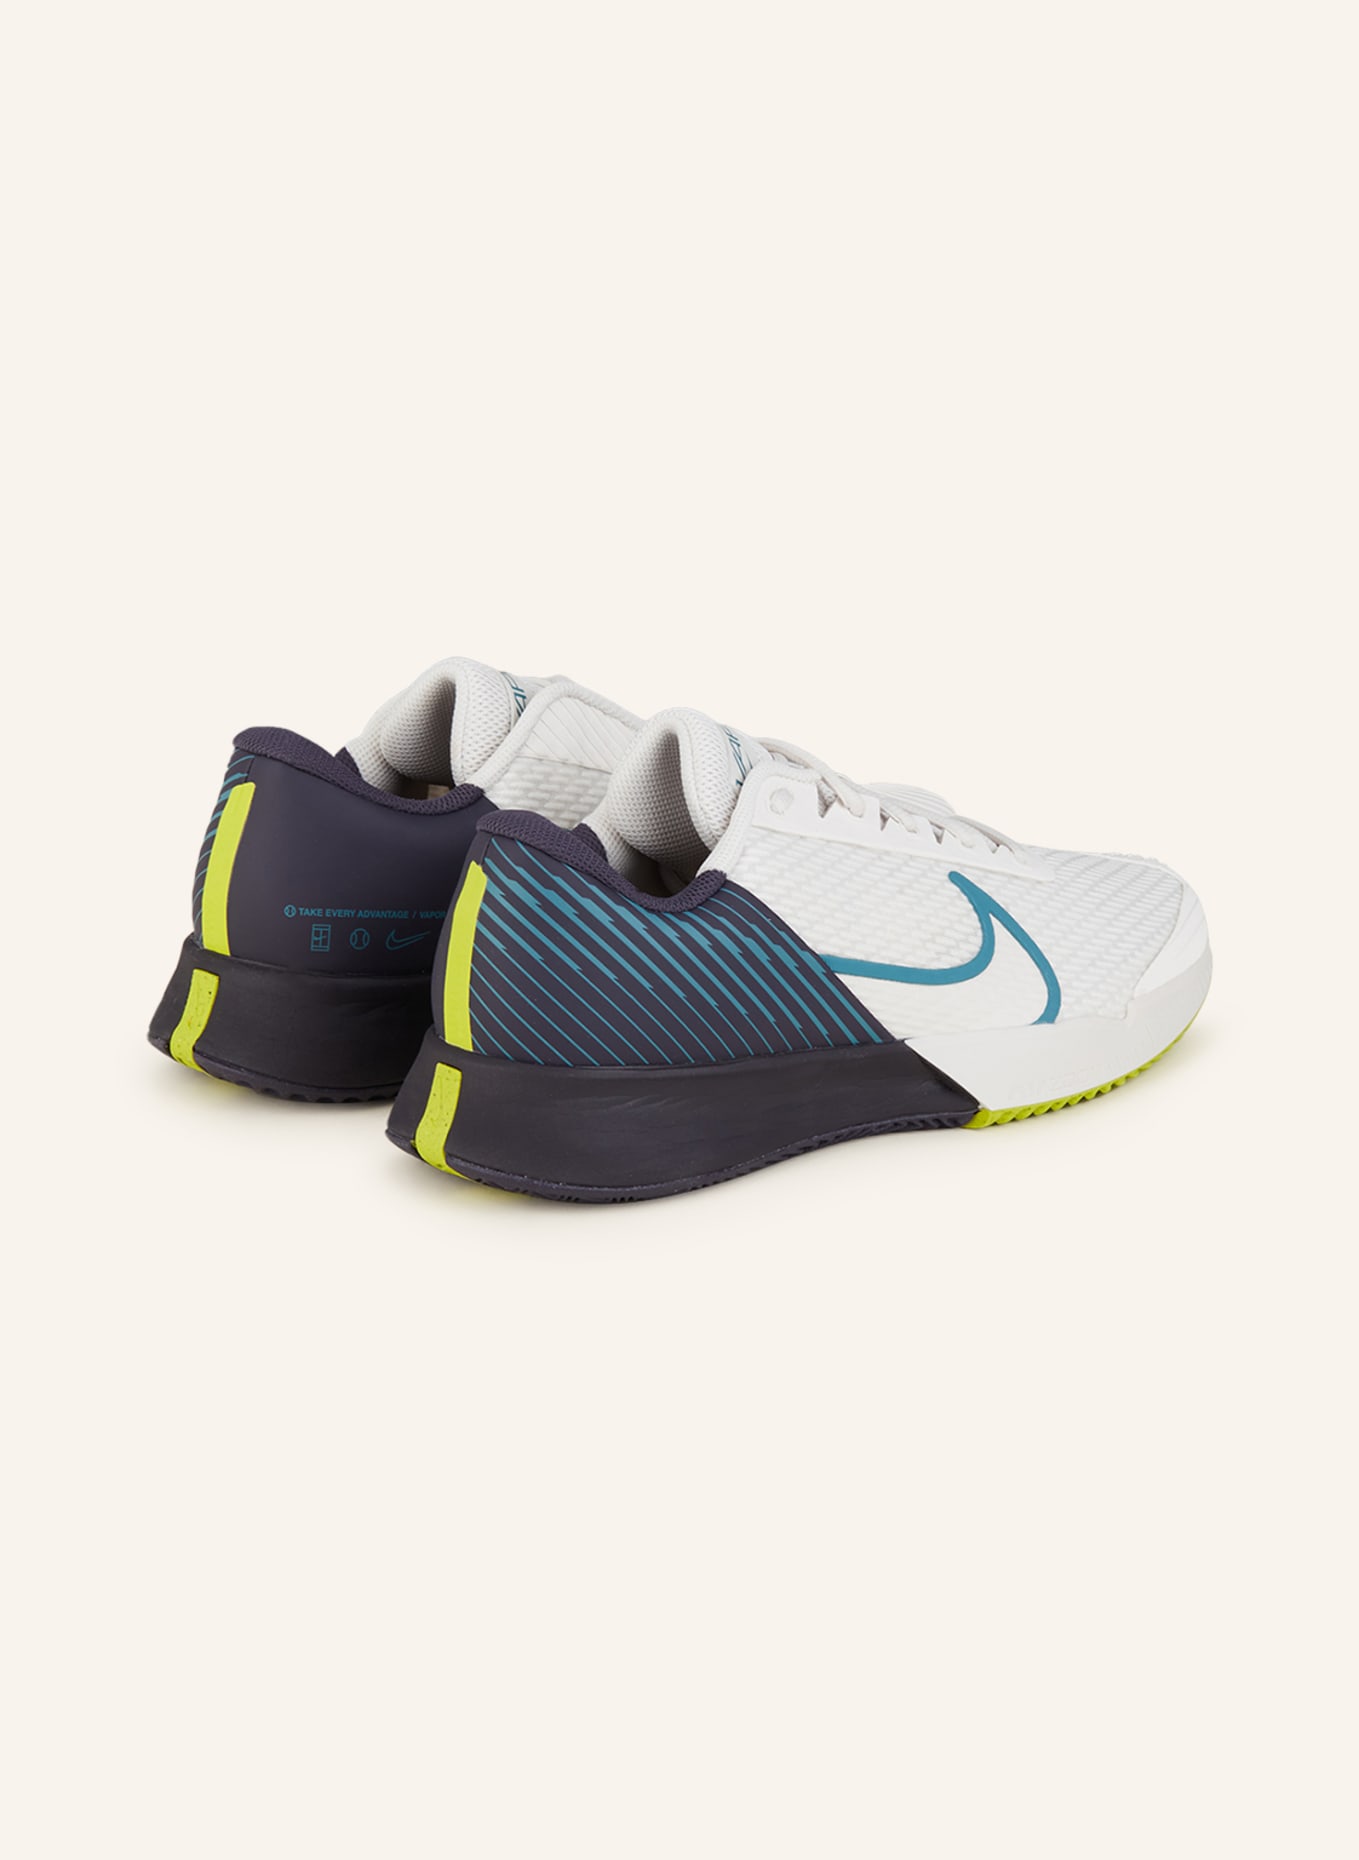 Nike Tennis shoes COURT AIR ZOOM VAPOR in white/ dark blue